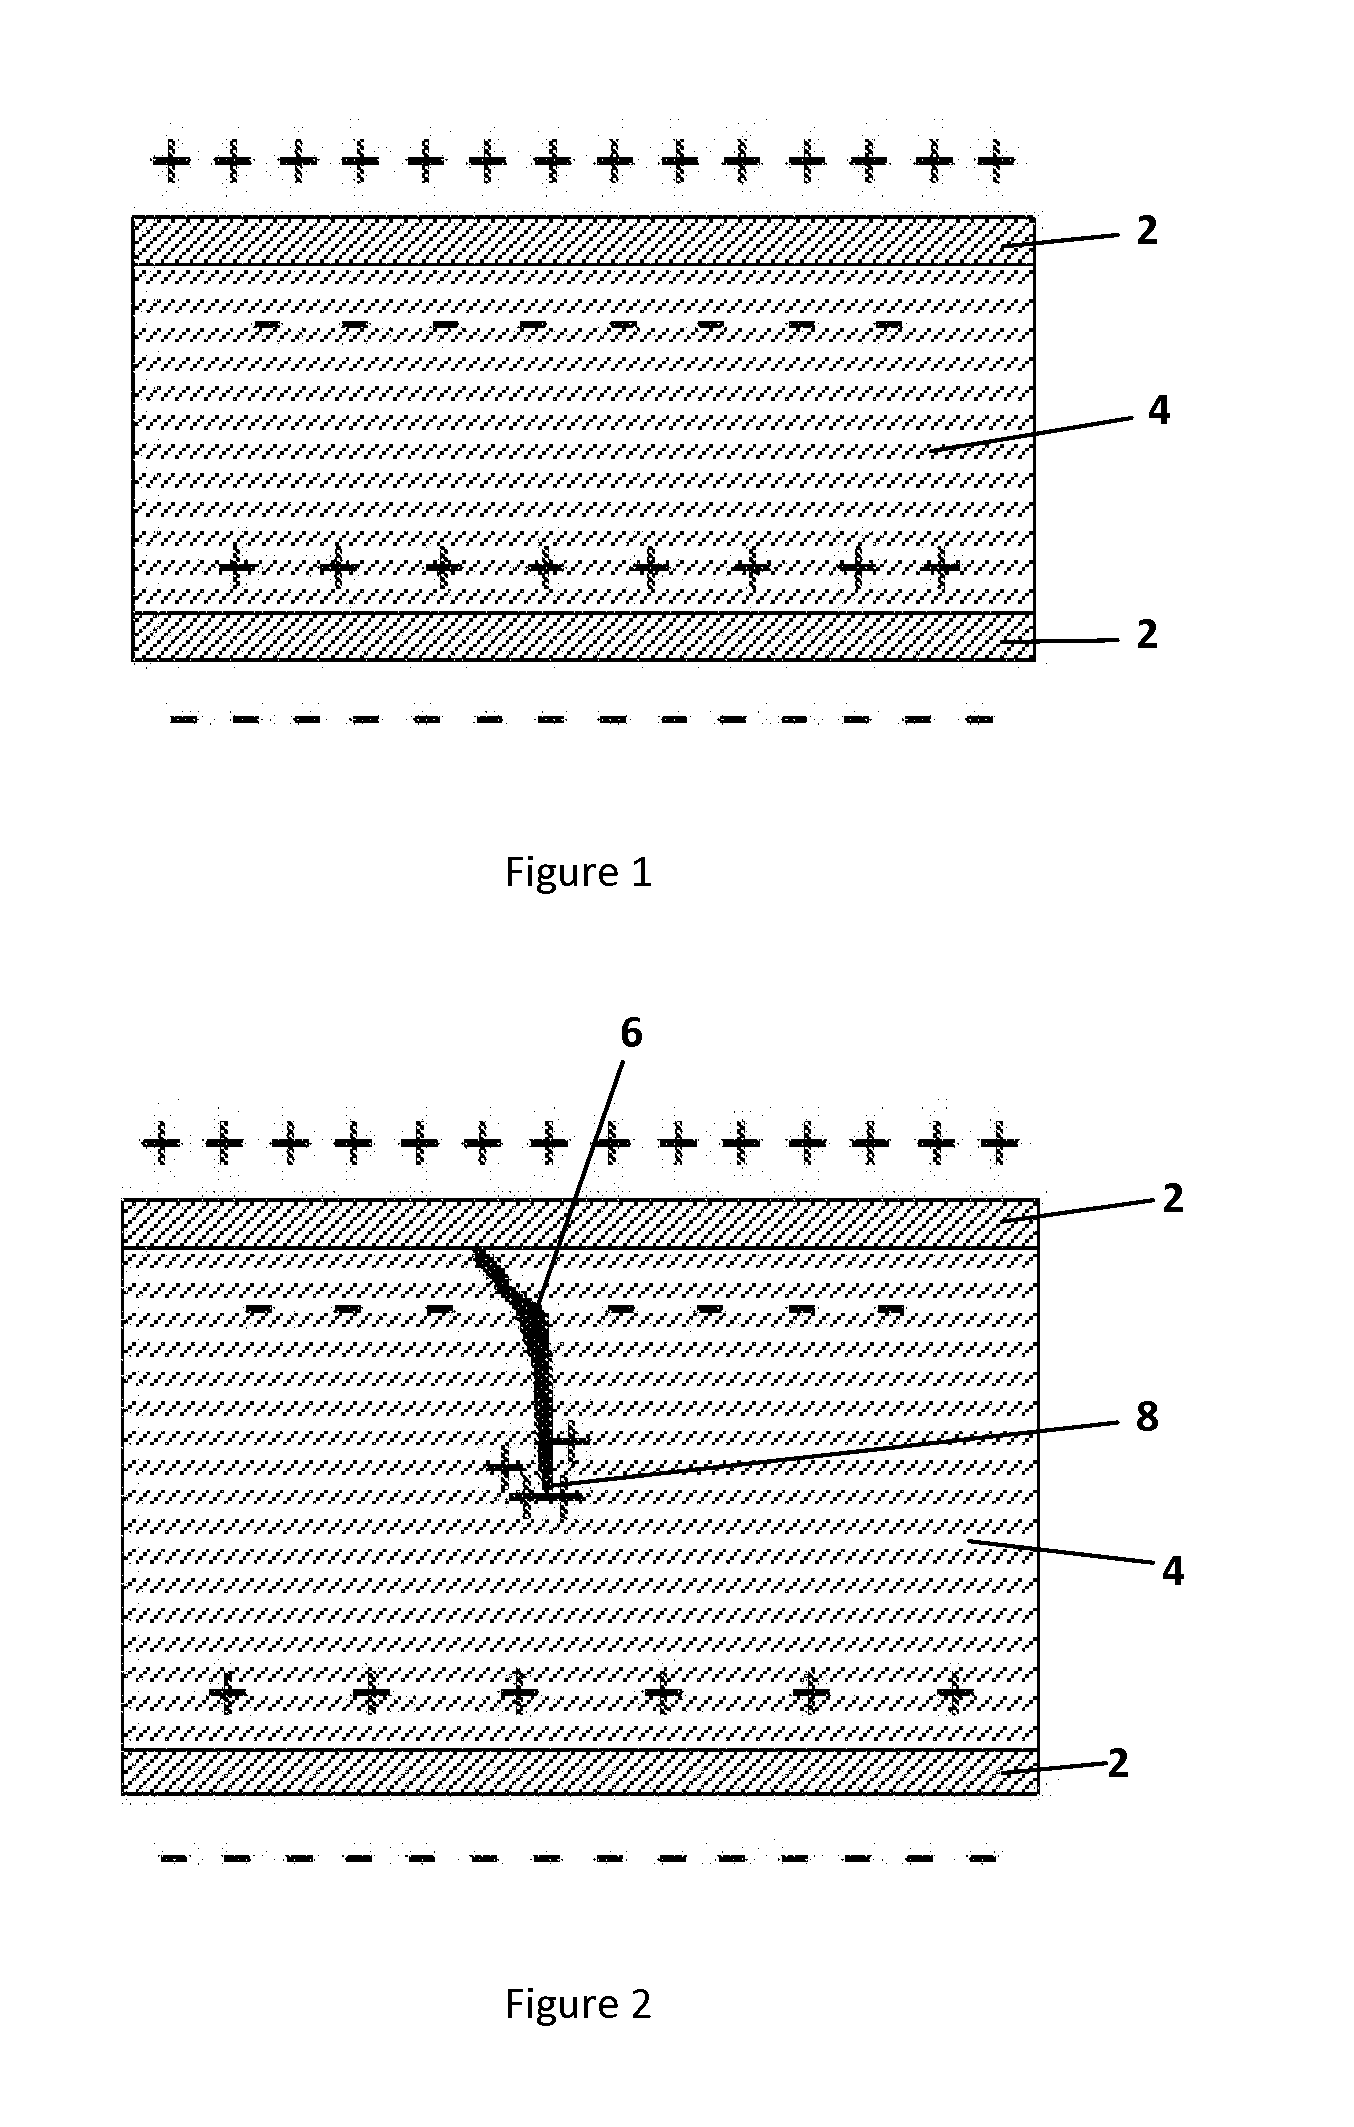 Method of making dielectric capacitors with increased dielectric breakdown strength